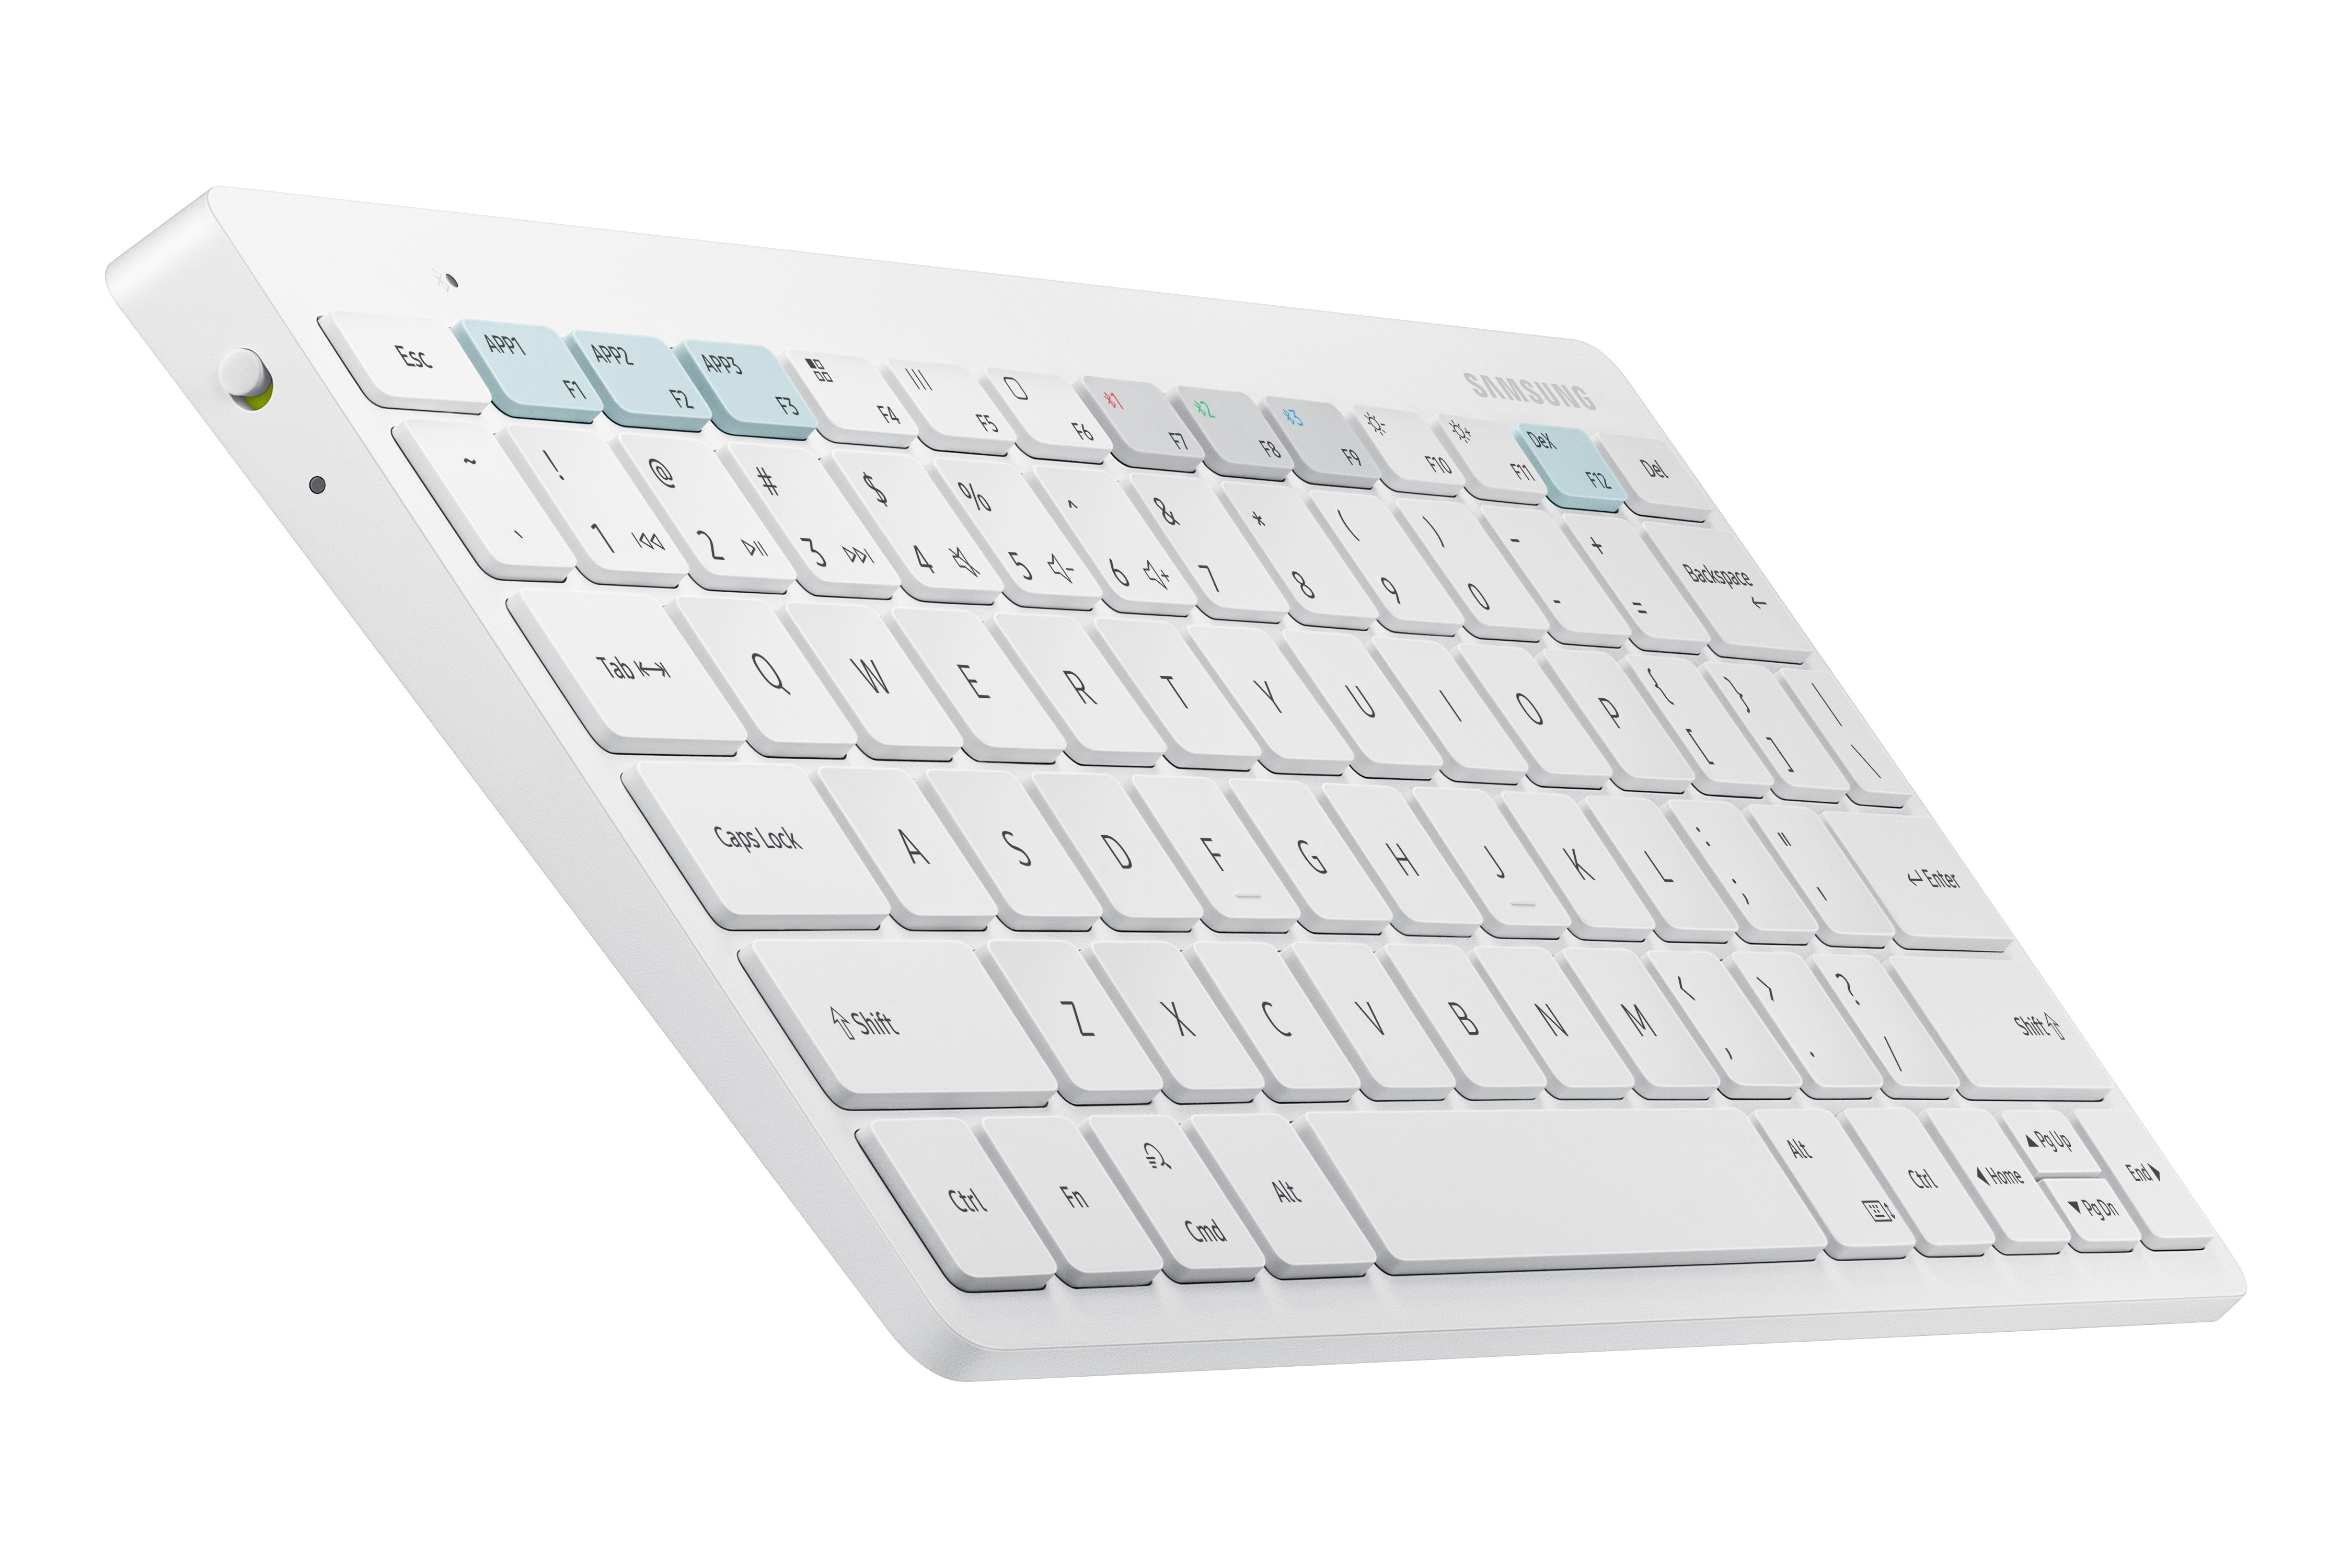 Smart Keyboard Trio 500, | White Accessories EJ-B3400UWEGUS - US Mobile Samsung